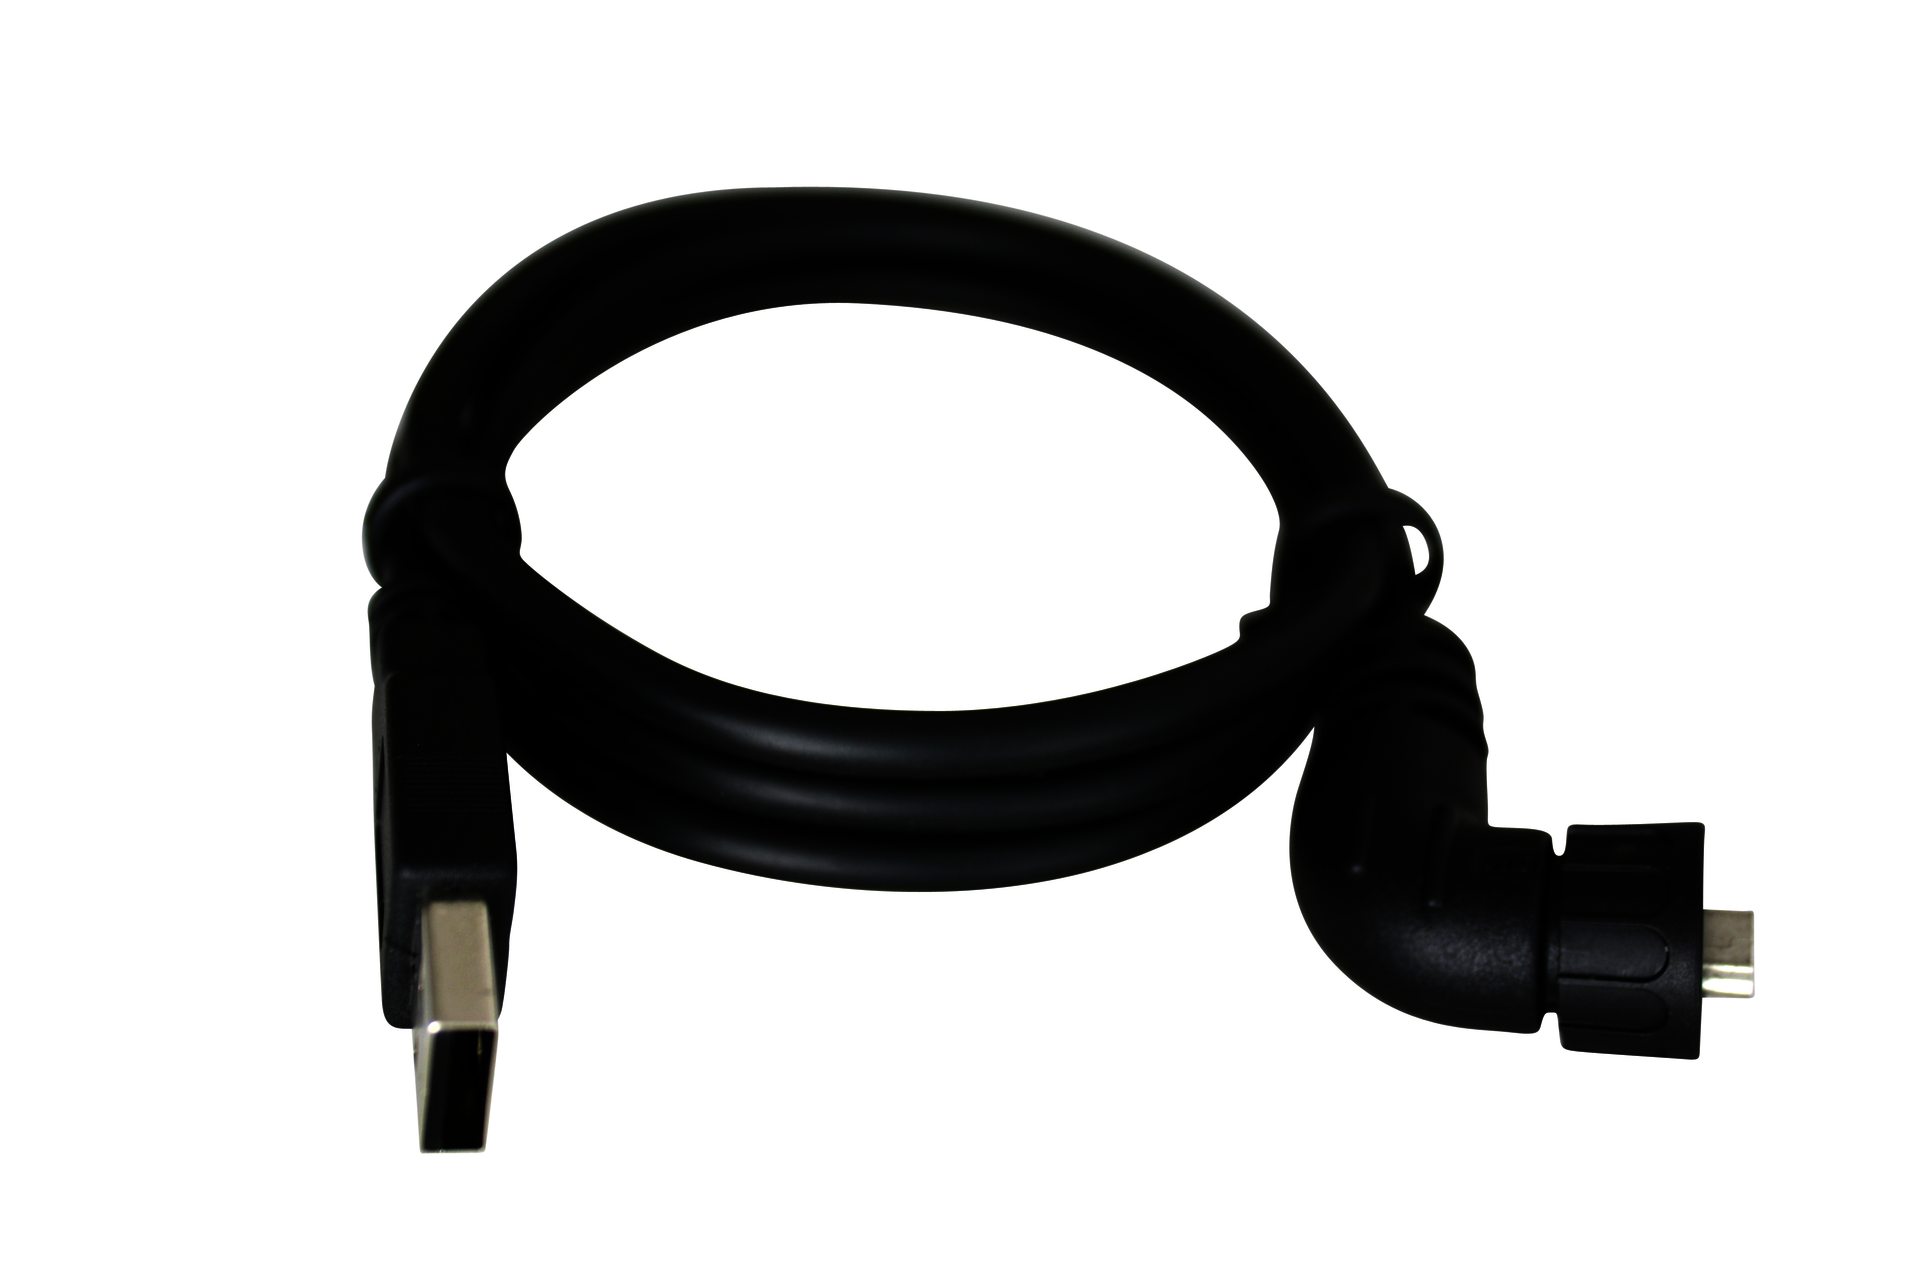 AEM Infinity IP67 spec comms cable (39" Length) - Klik om te sluiten